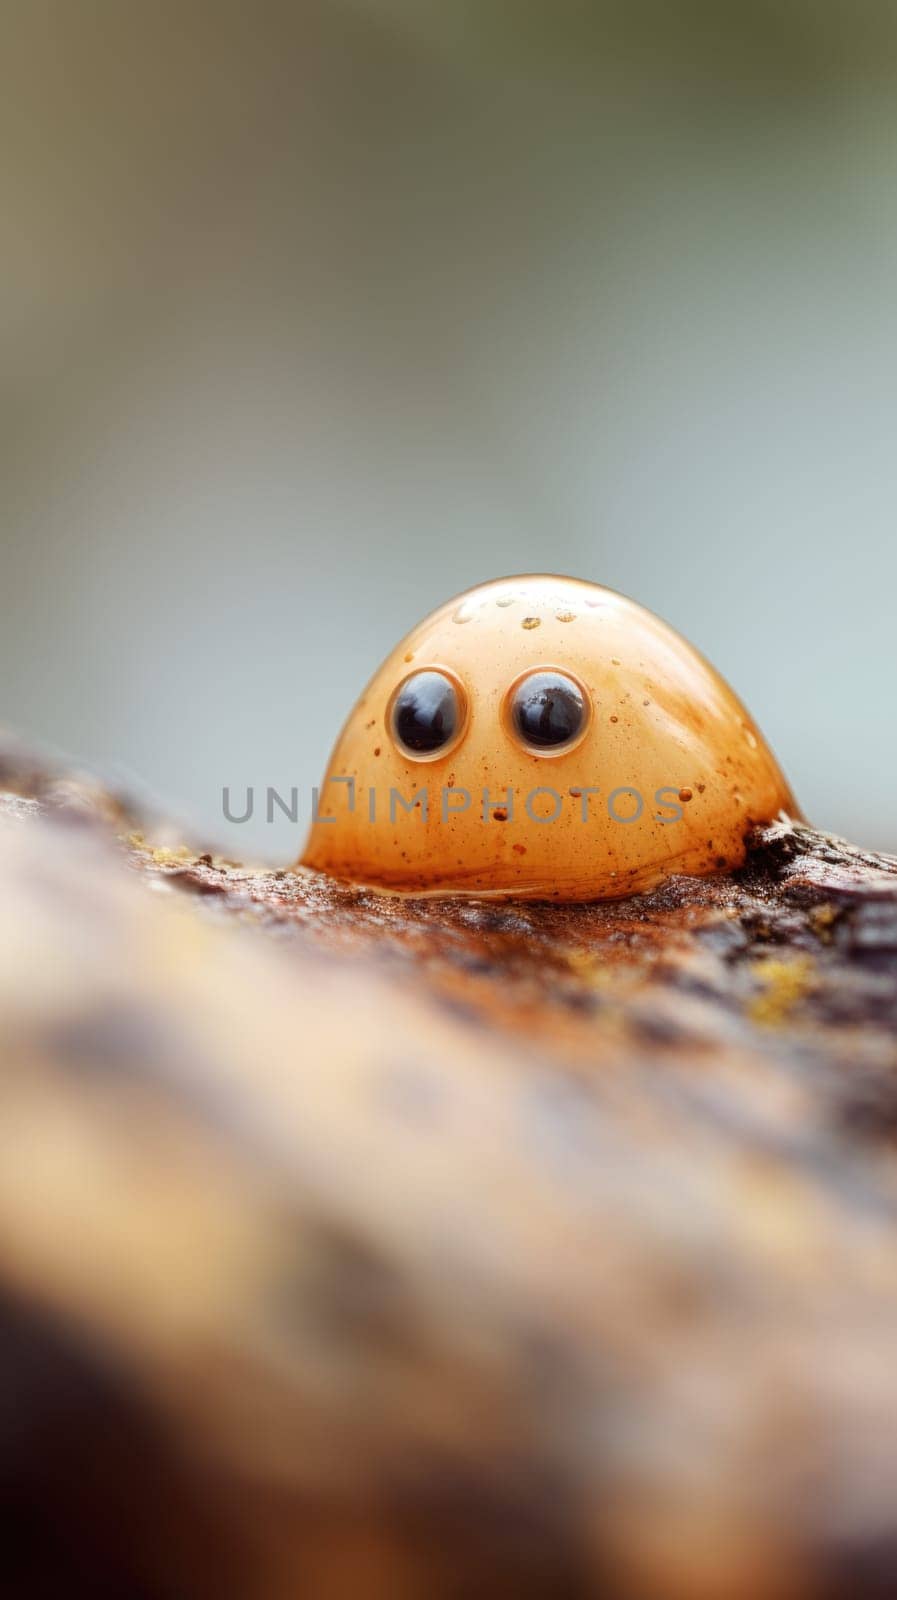 A small orange bug with two eyes on it. Pareidolia.